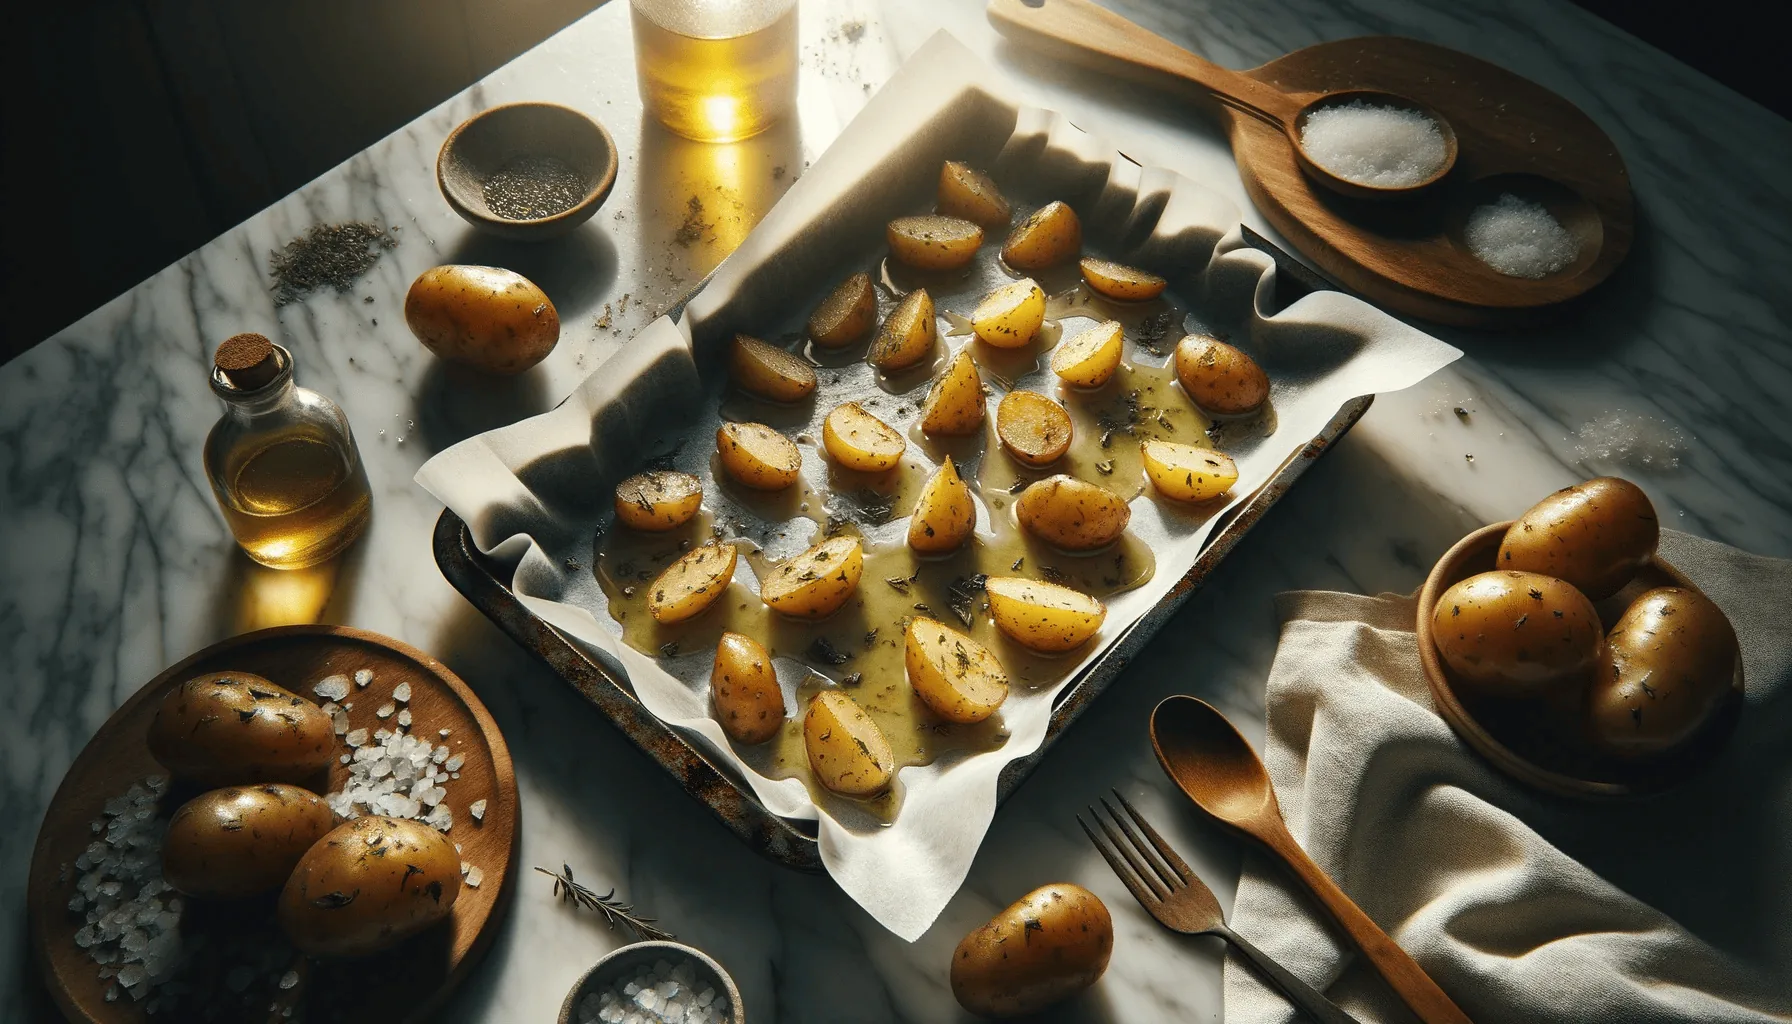 The making of Italian roasted potatoes